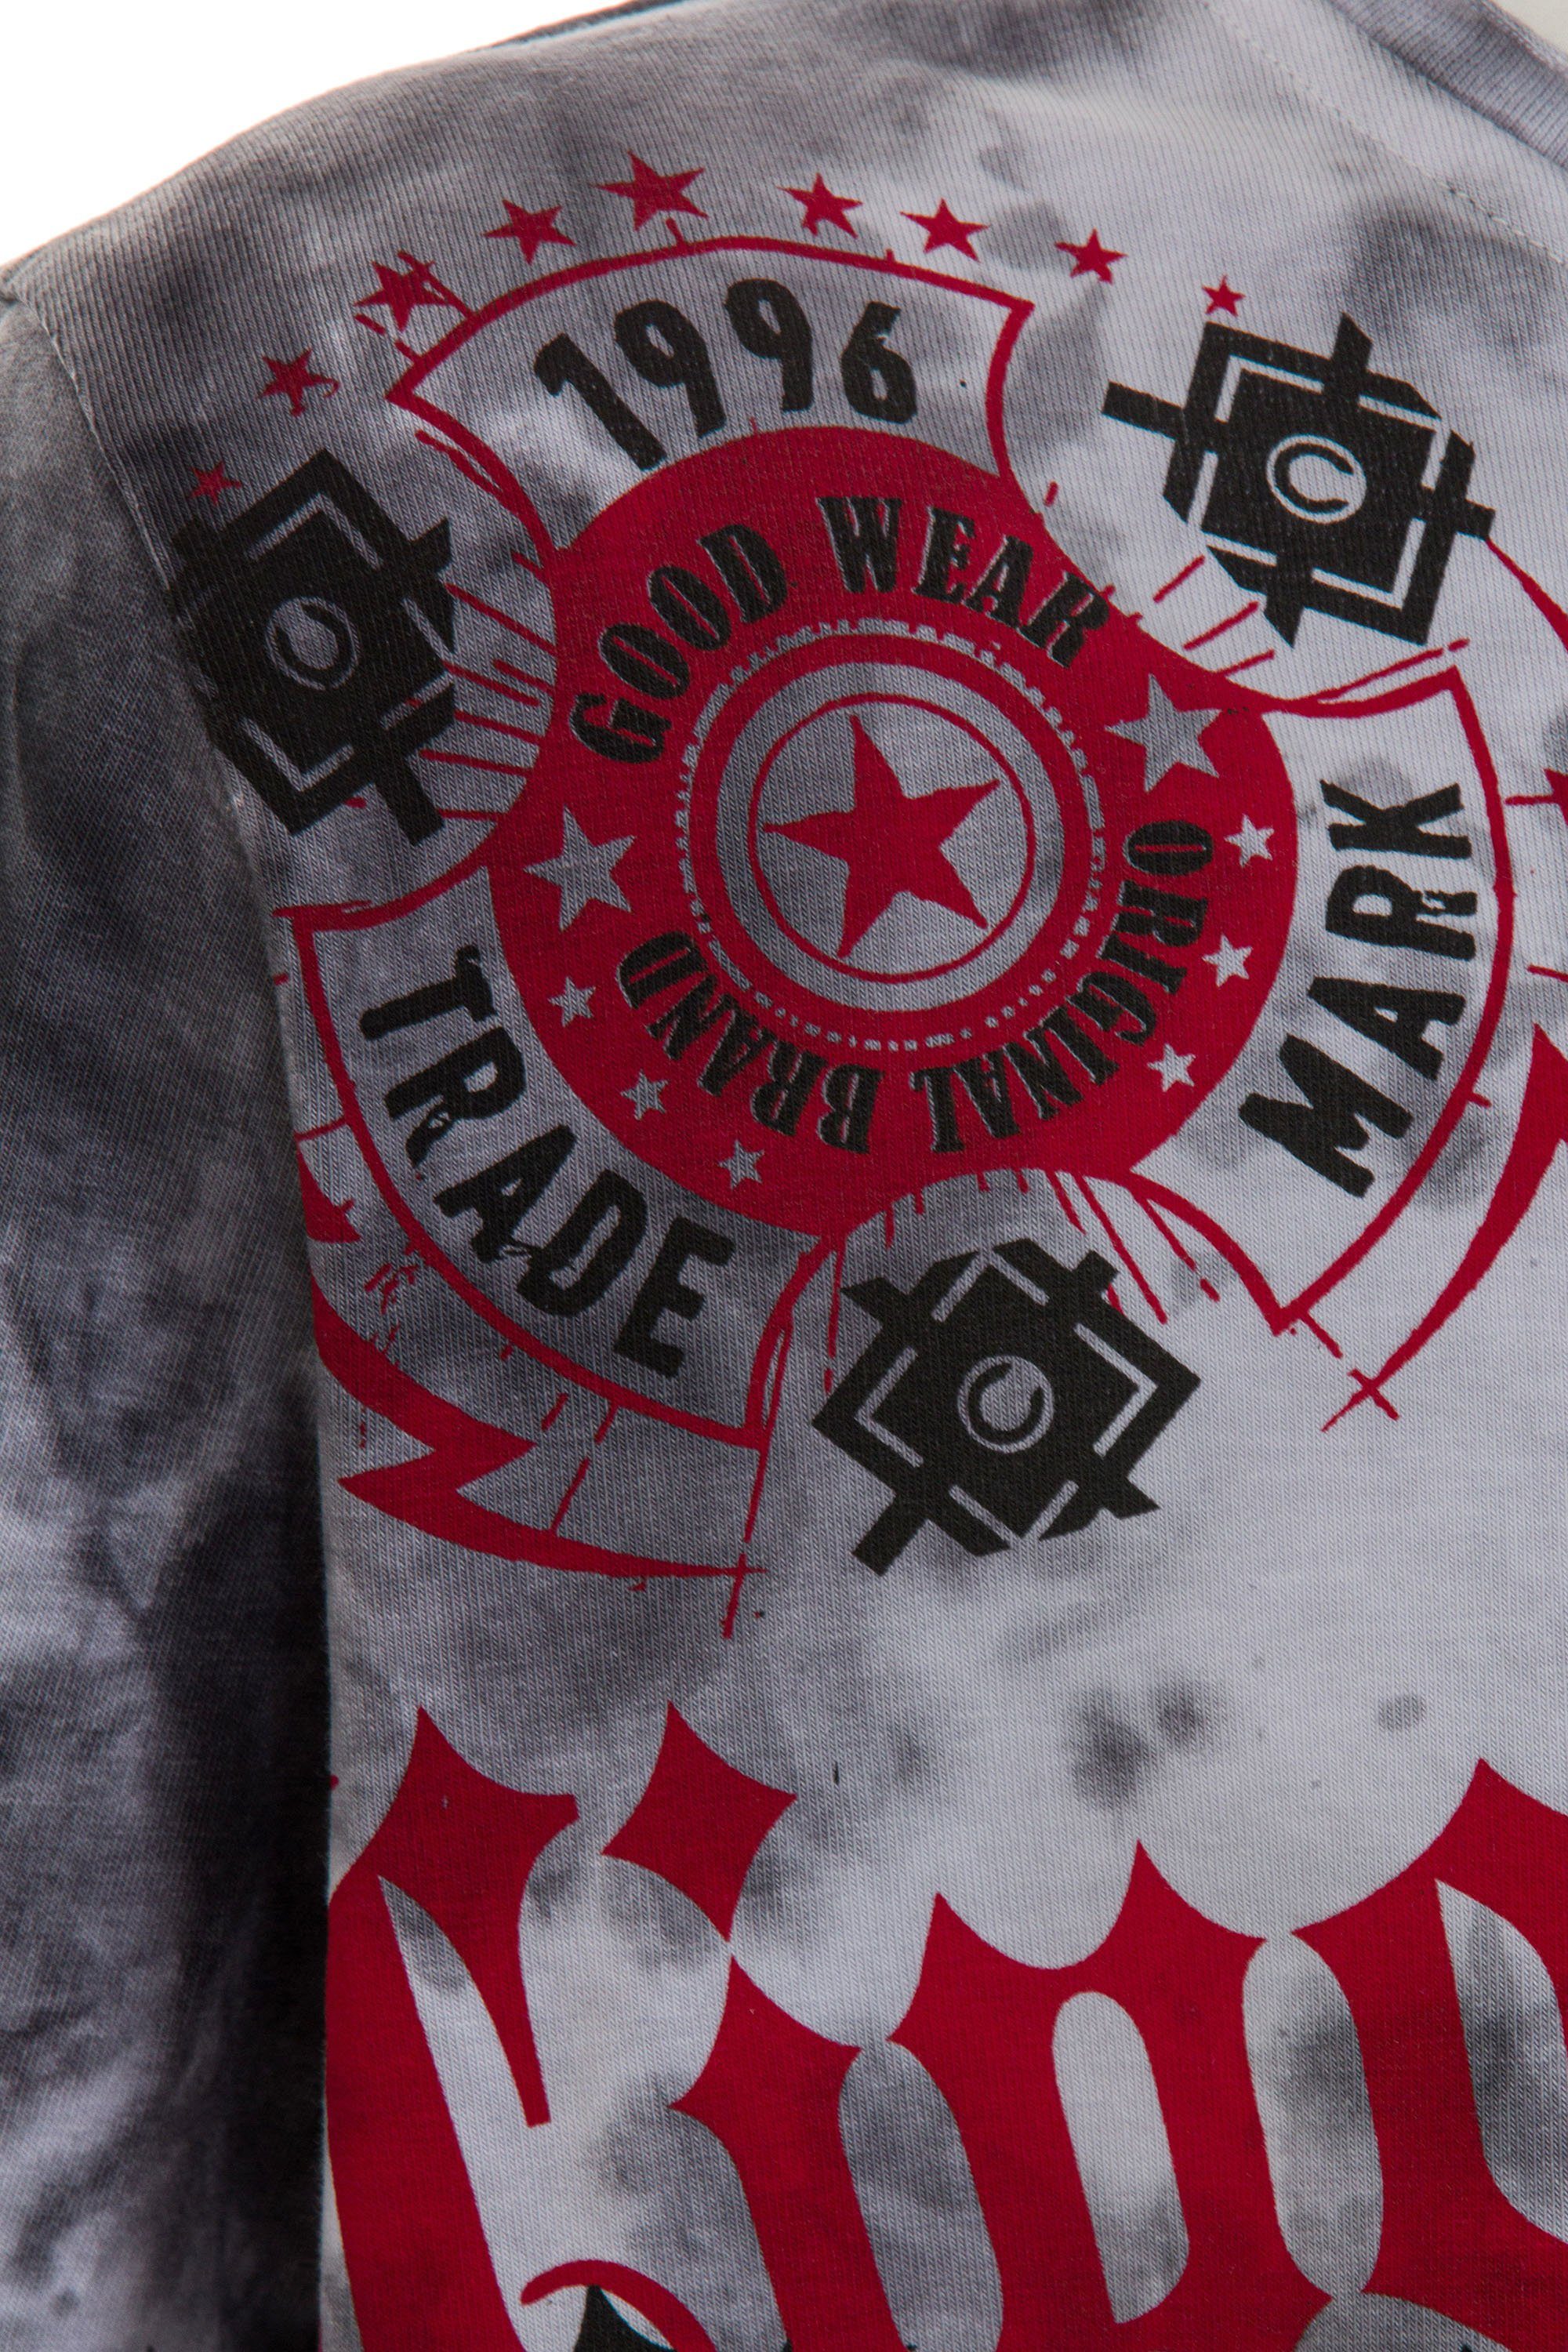 & Baxx T-Shirt Cipo anthrazit Markenprint mit großflächigem